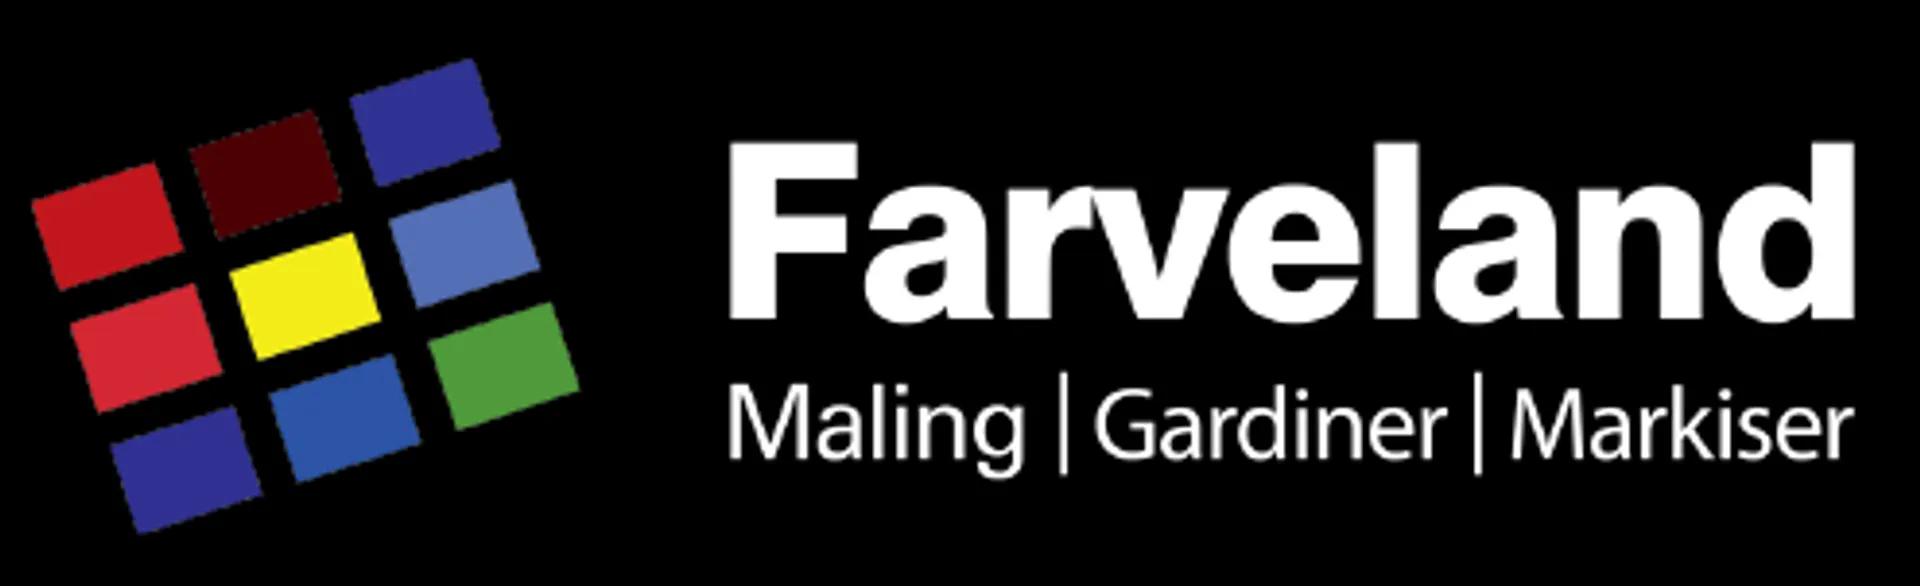 FARVELAND logo of current catalogue